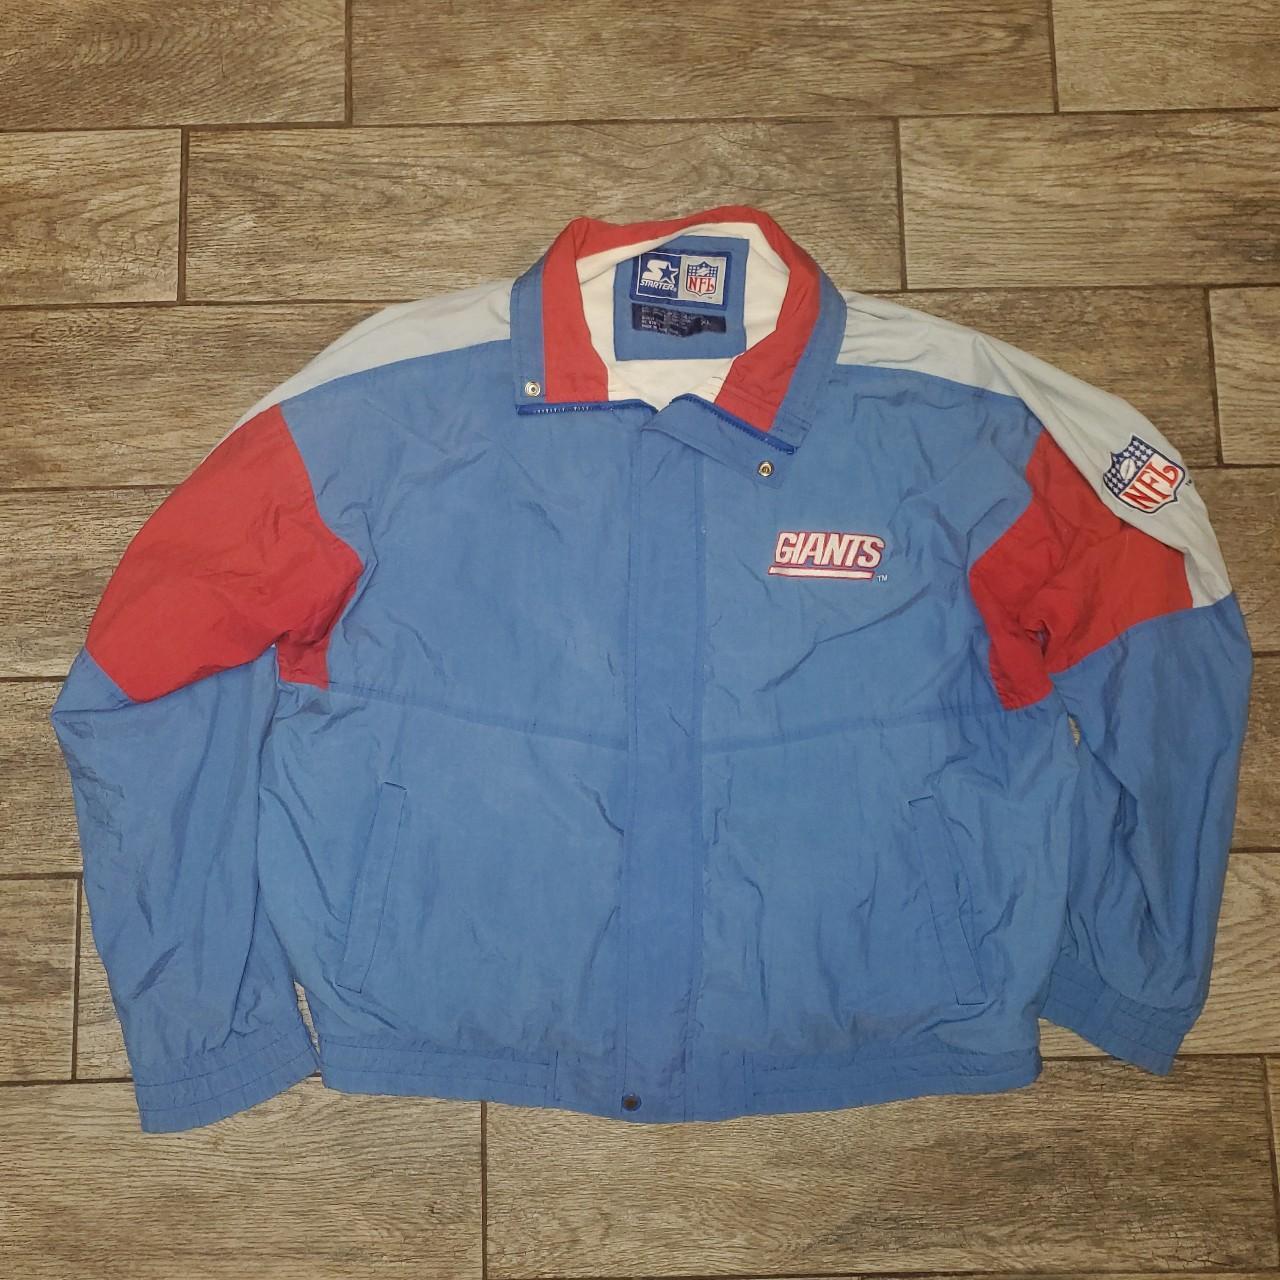 giants starter jacket 90s